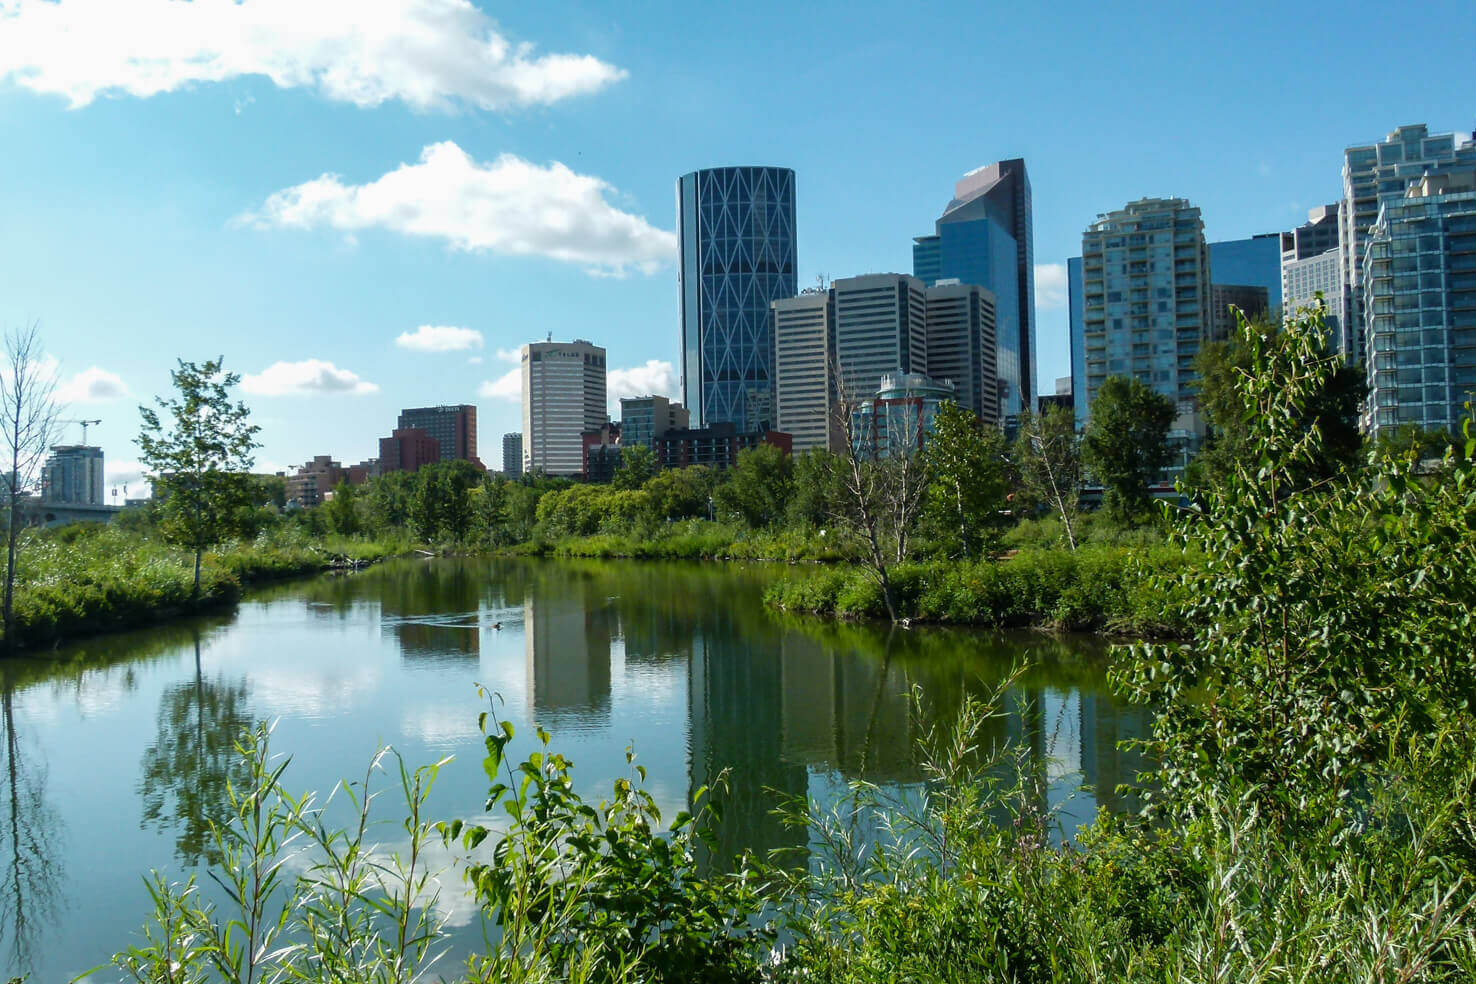 Hidden - Explore the best experiences in Calgary!